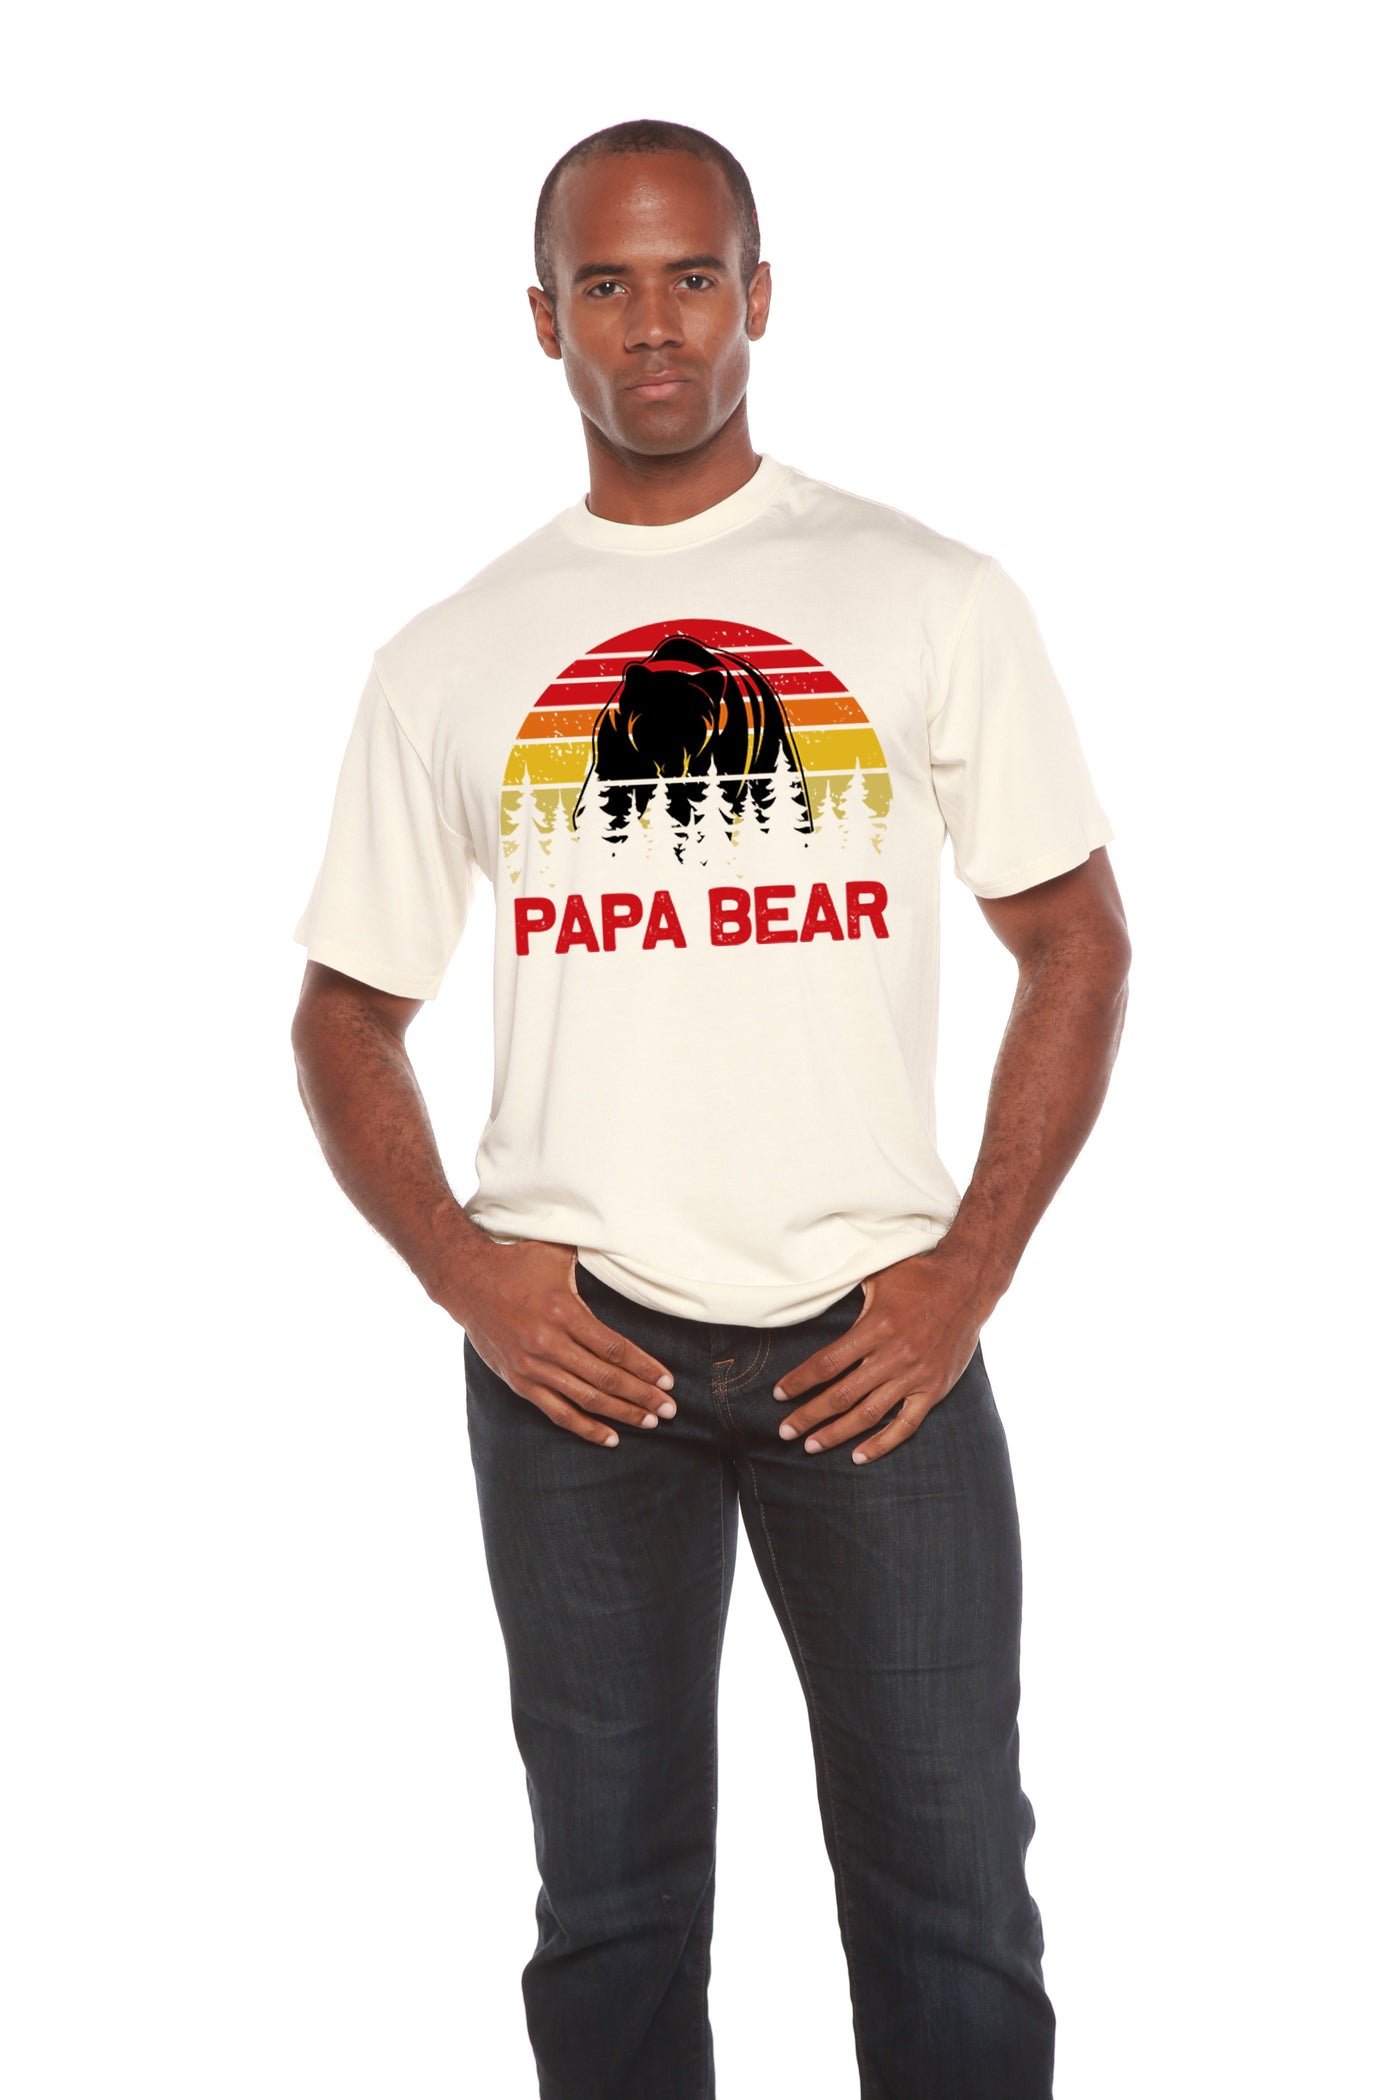 Papa Bear Men's Bamboo Viscose/Organic Cotton Short Sleeve T-Shirt - Spun Bamboo